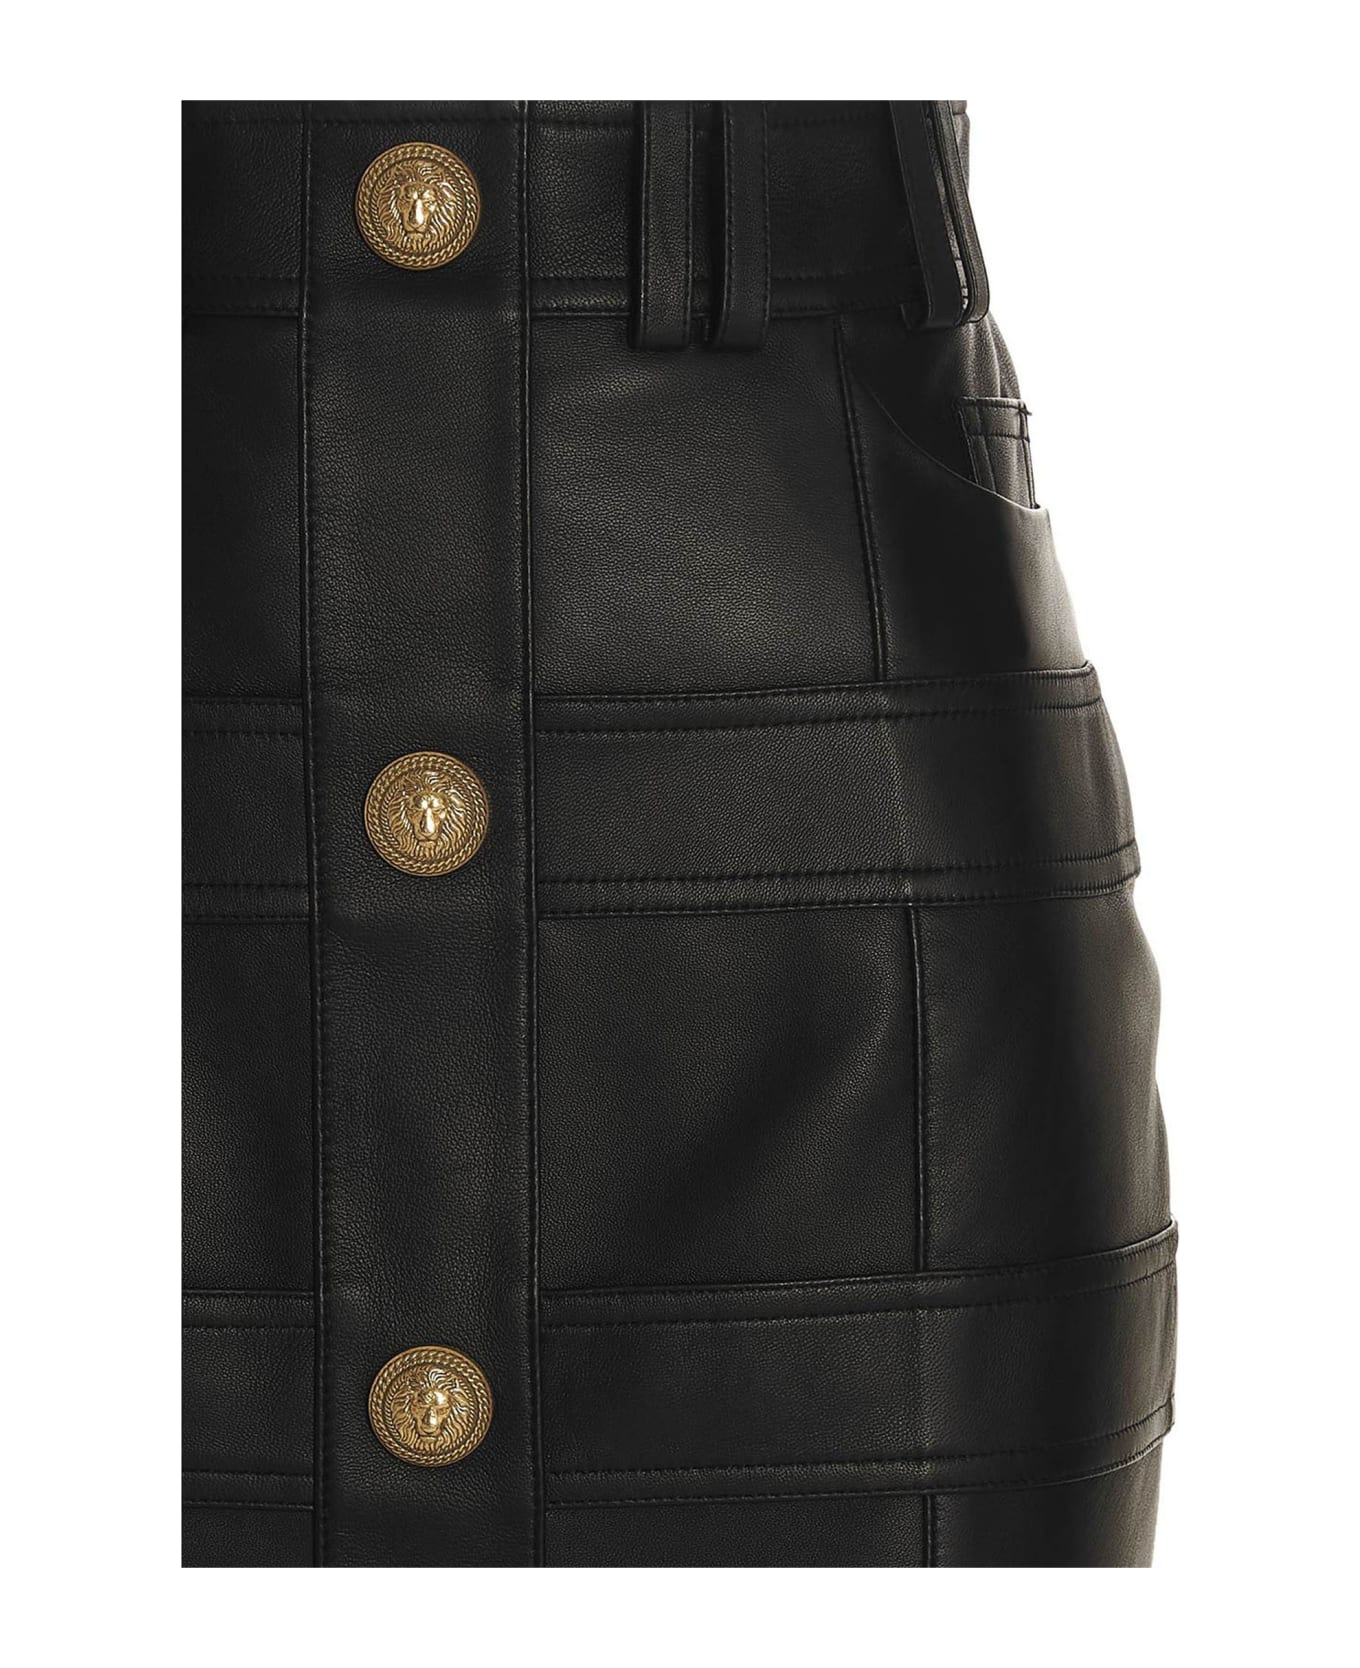 Balmain Lion Button Leather Skirt - Black  